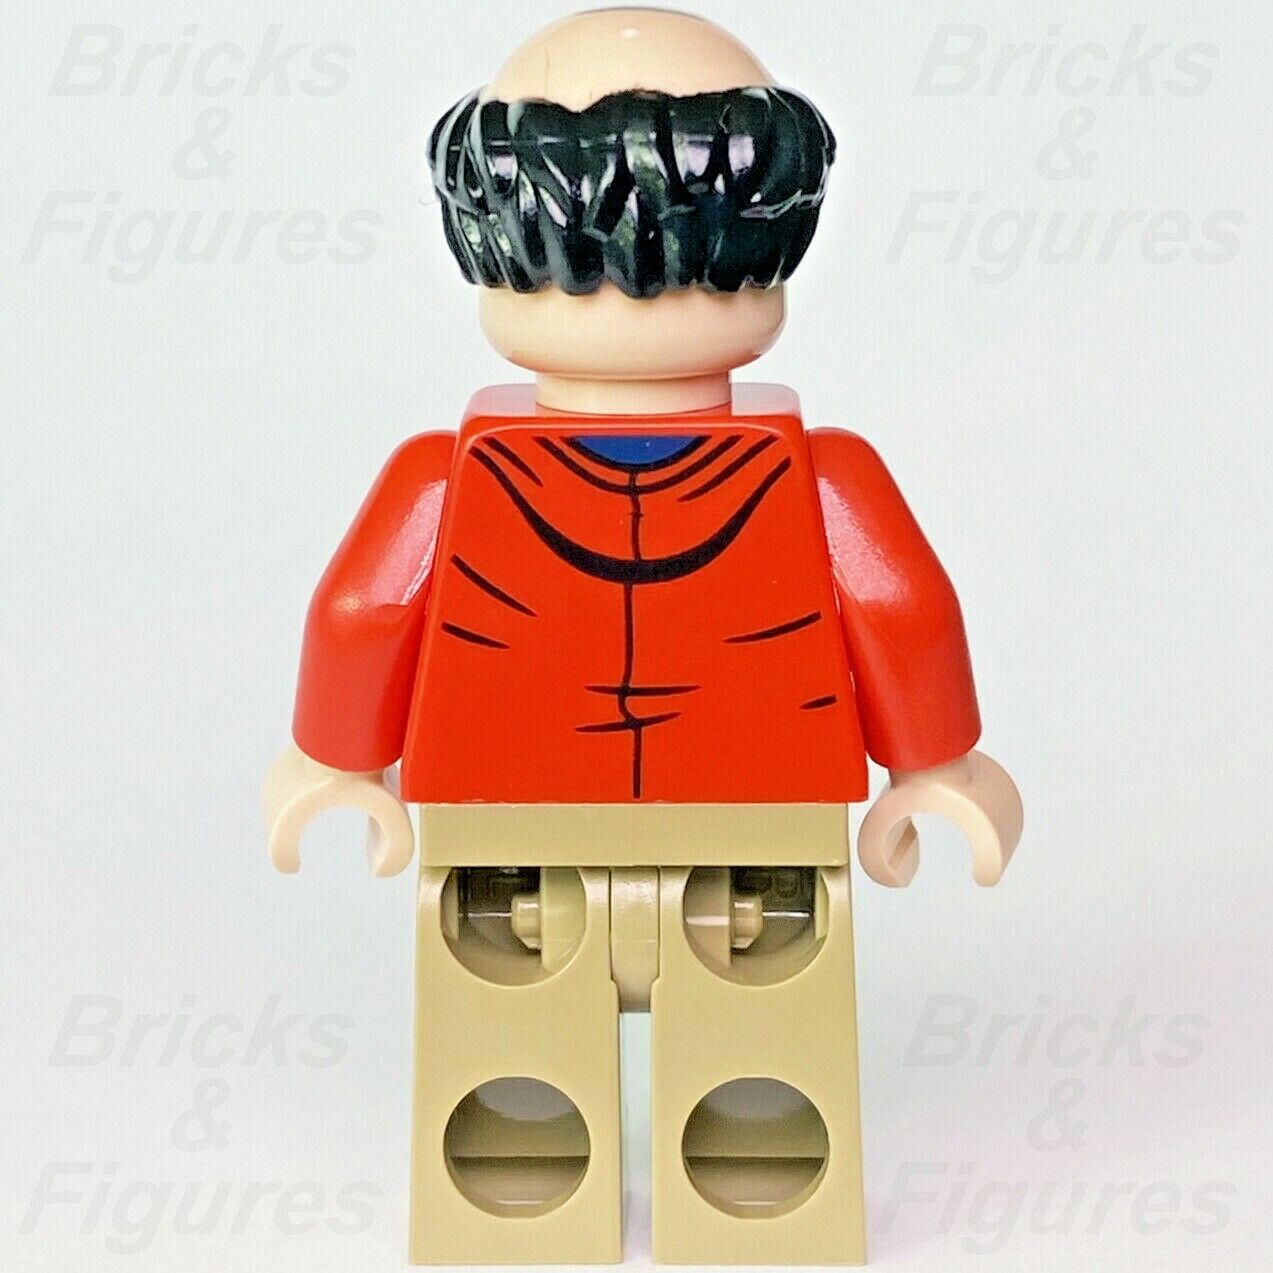 Ideas LEGO George Louis Costanza CUUSOO Seinfeld Show Minifigure 21328 idea092 - Bricks & Figures